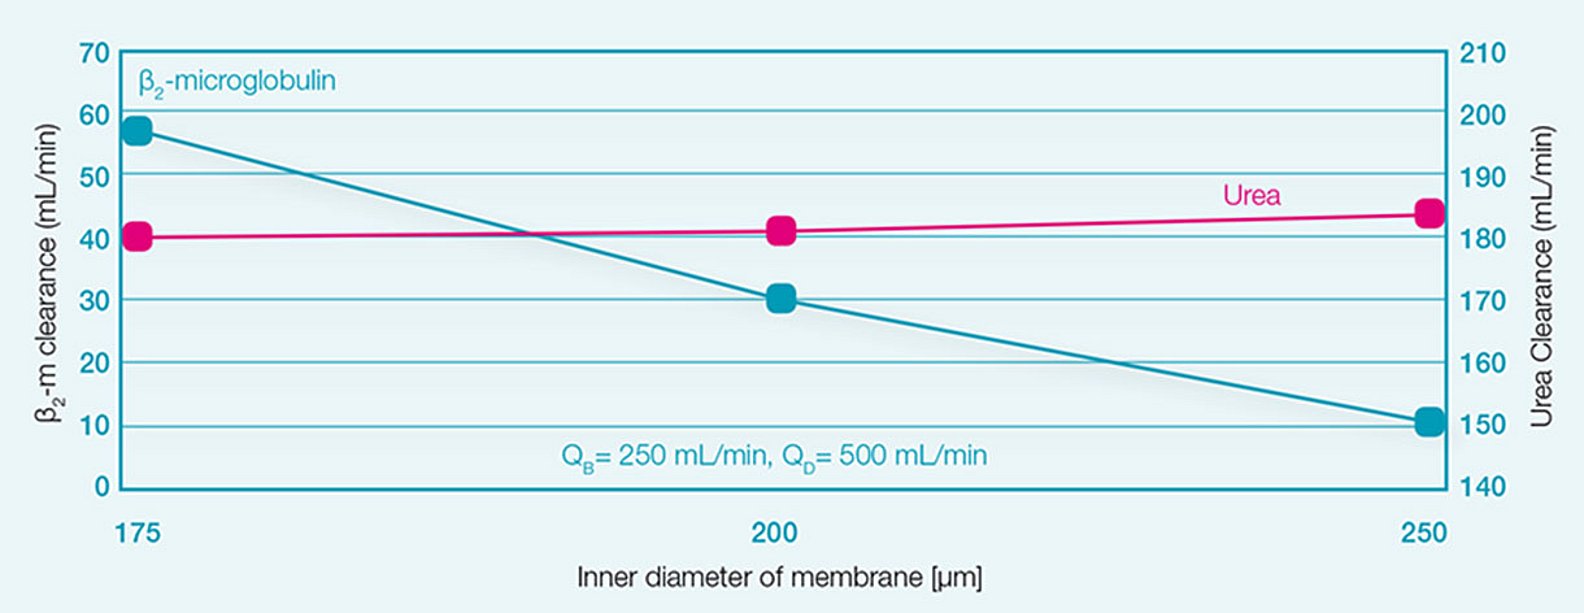 Clearance versus inner diameter of fiber